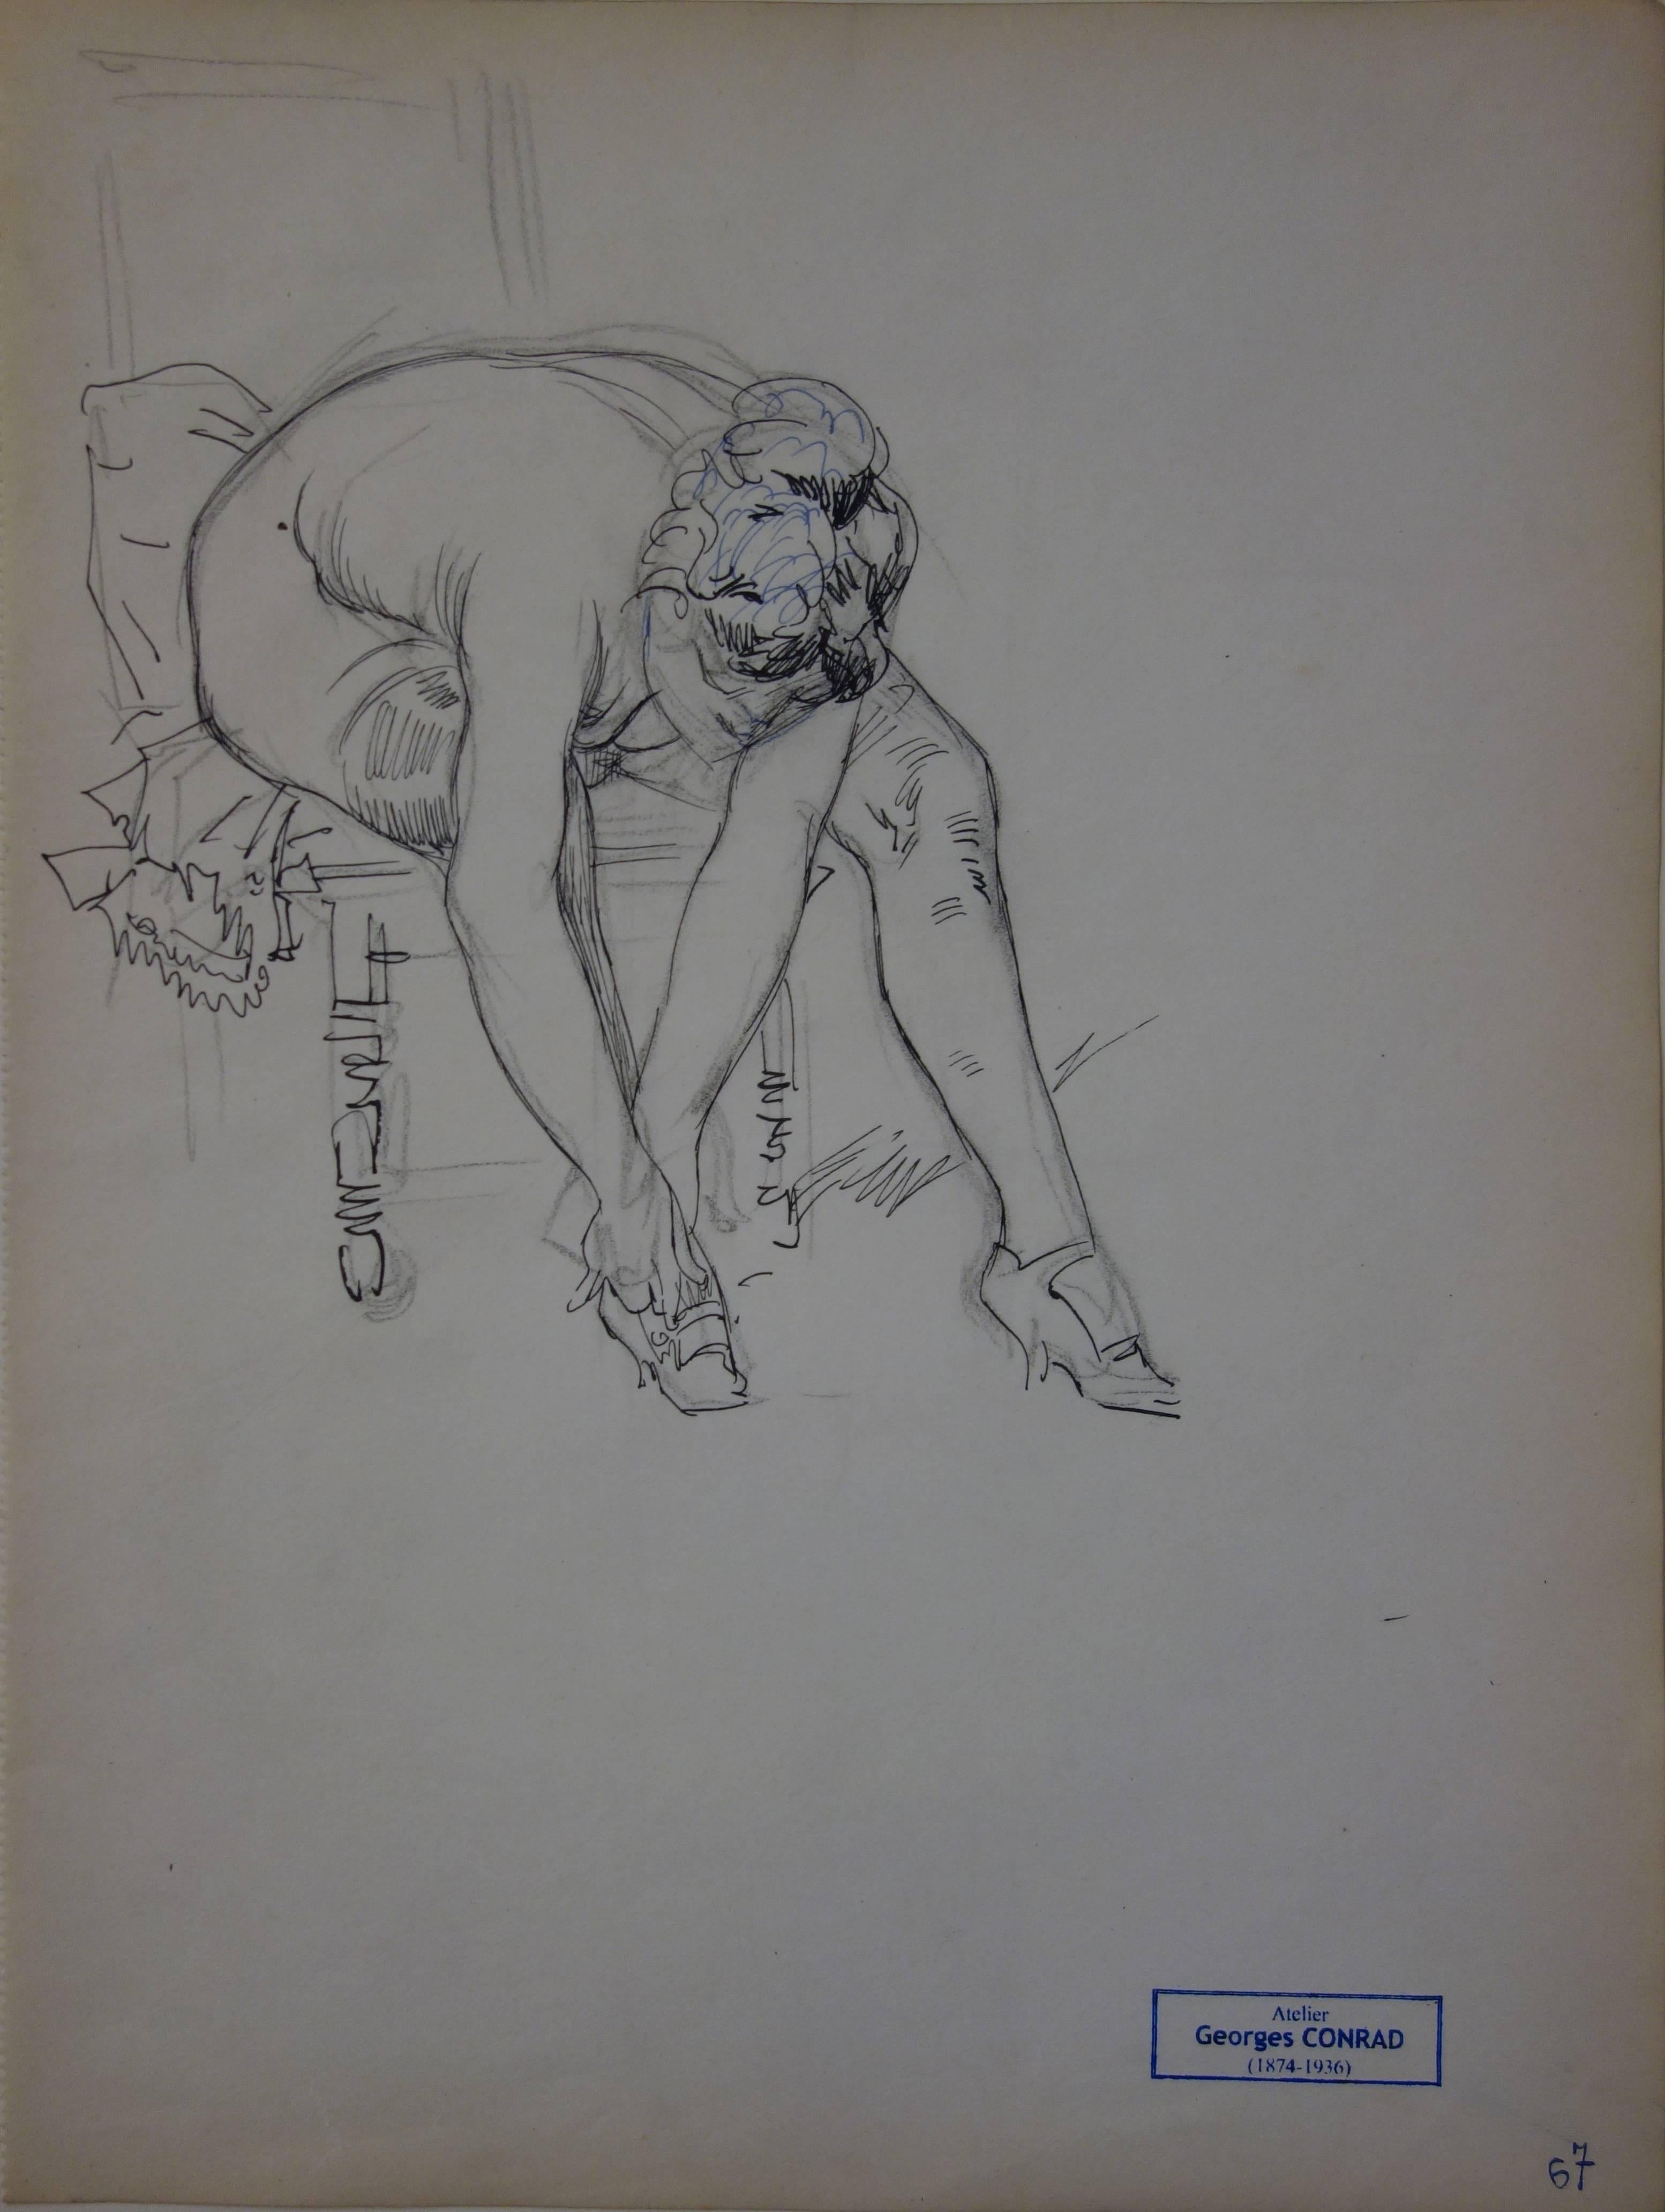 Tribute to Degas Ballerina : Sitting female nude - Ink drawing - circa 1916